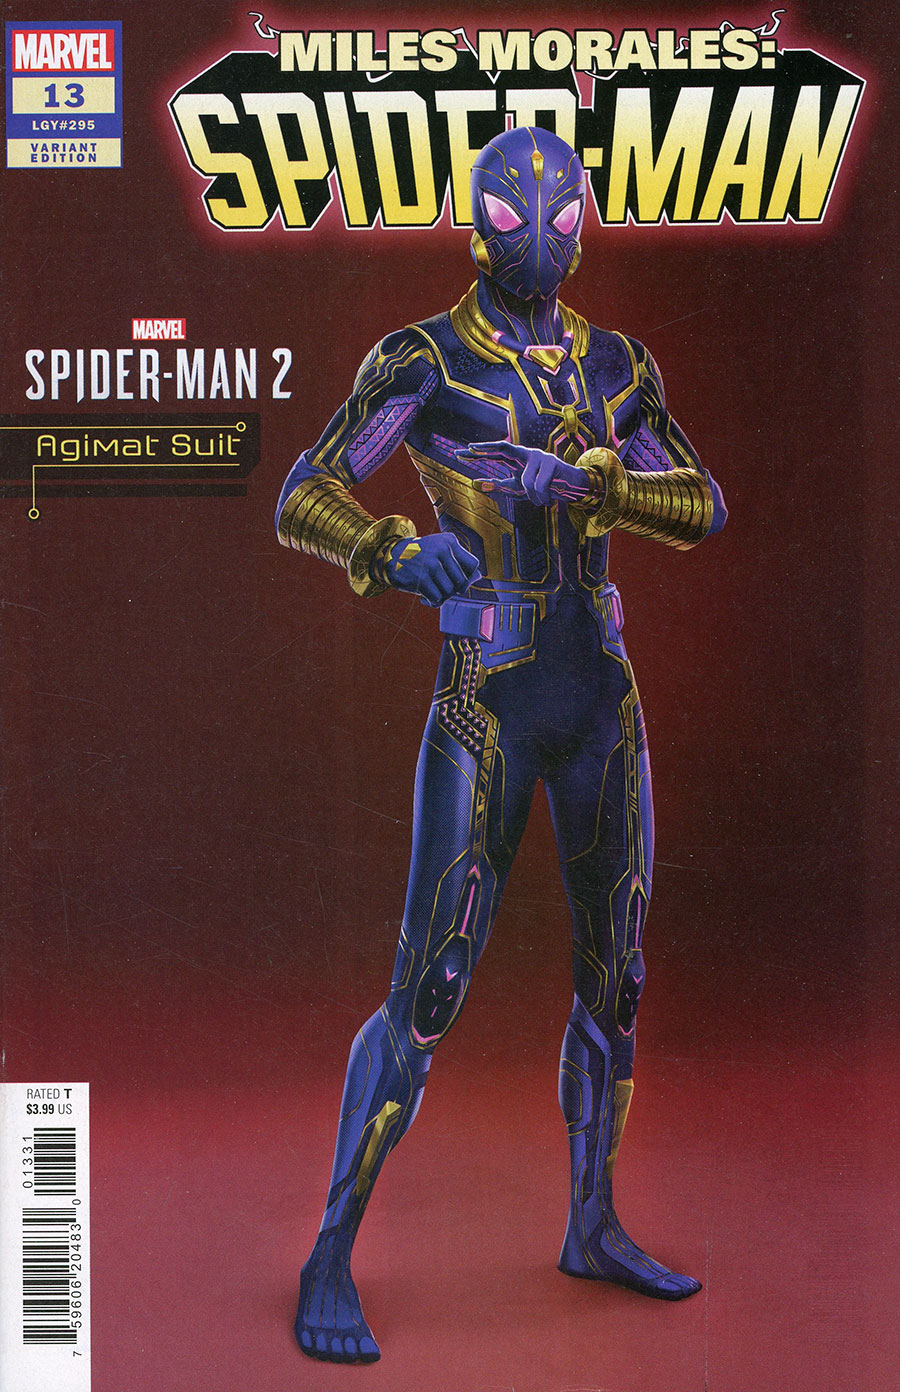 Miles Morales Spider-Man Vol 2 #13 Cover C Variant Marvels Spider-Man 2 Video Game Agimat Suit Cover (Gang War Tie-In)